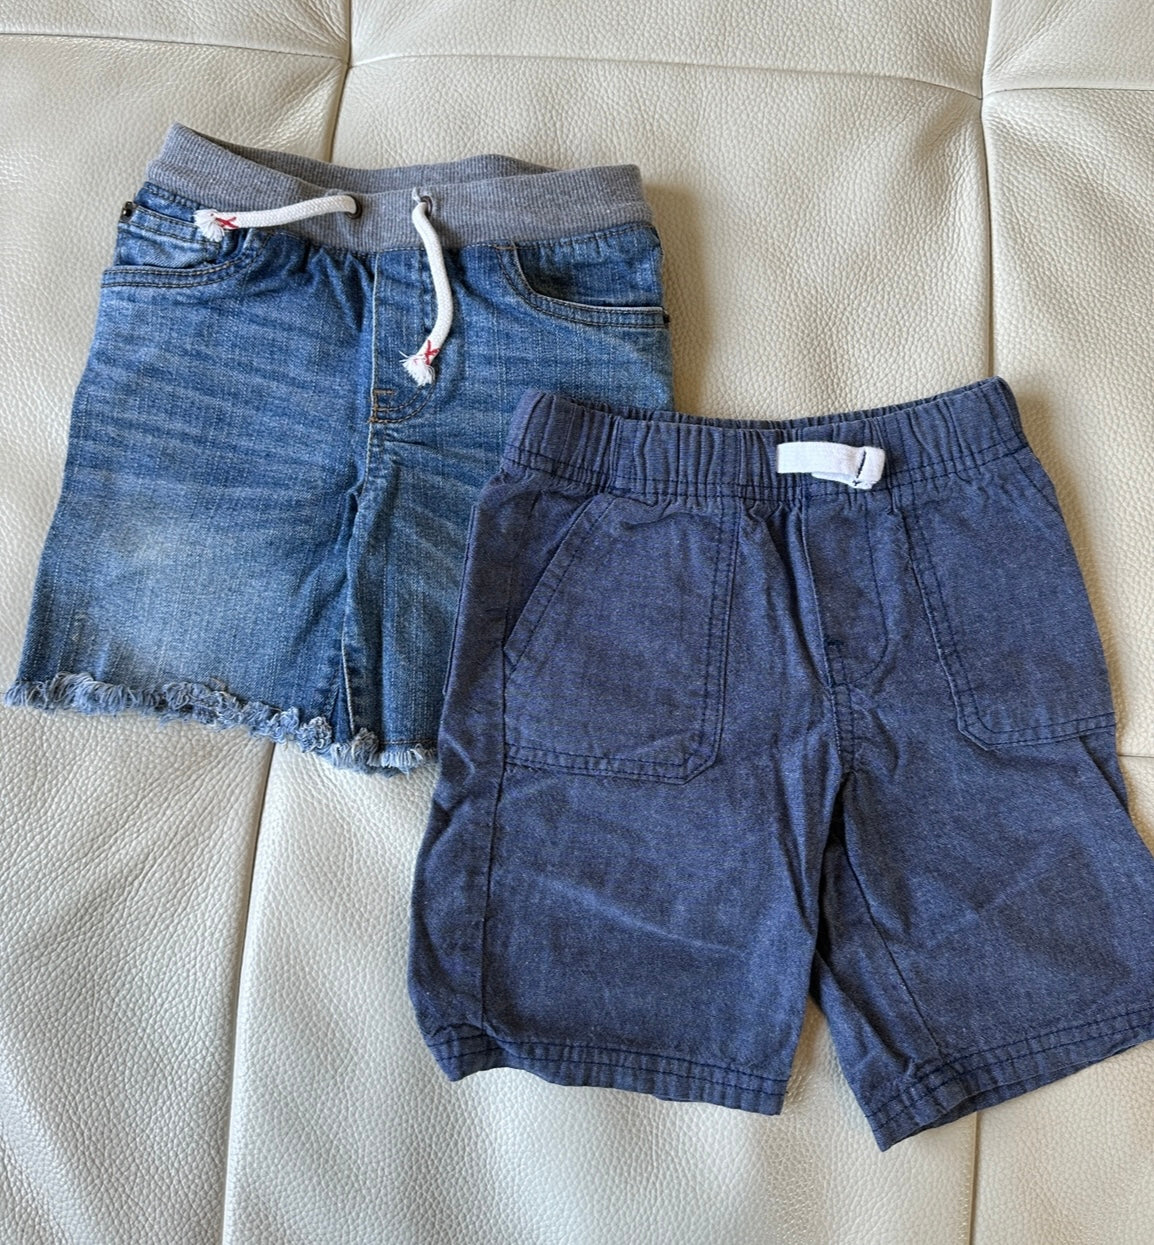 Jean shorts 4T